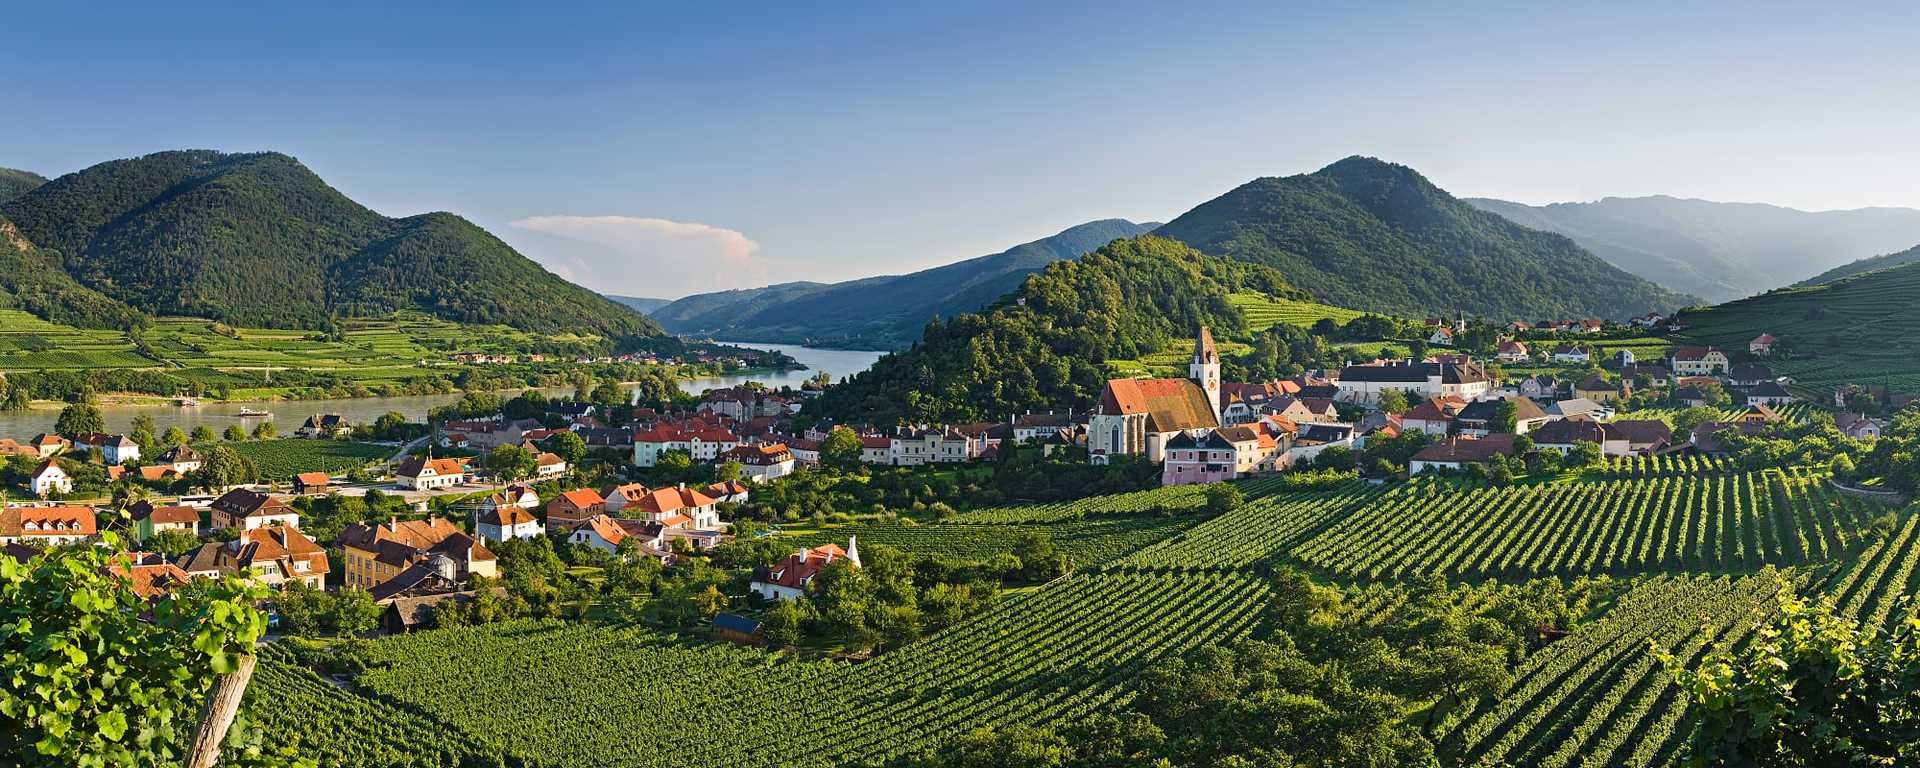 Vineyards surrounding Spitz an der Danau on the Danube river in Austria